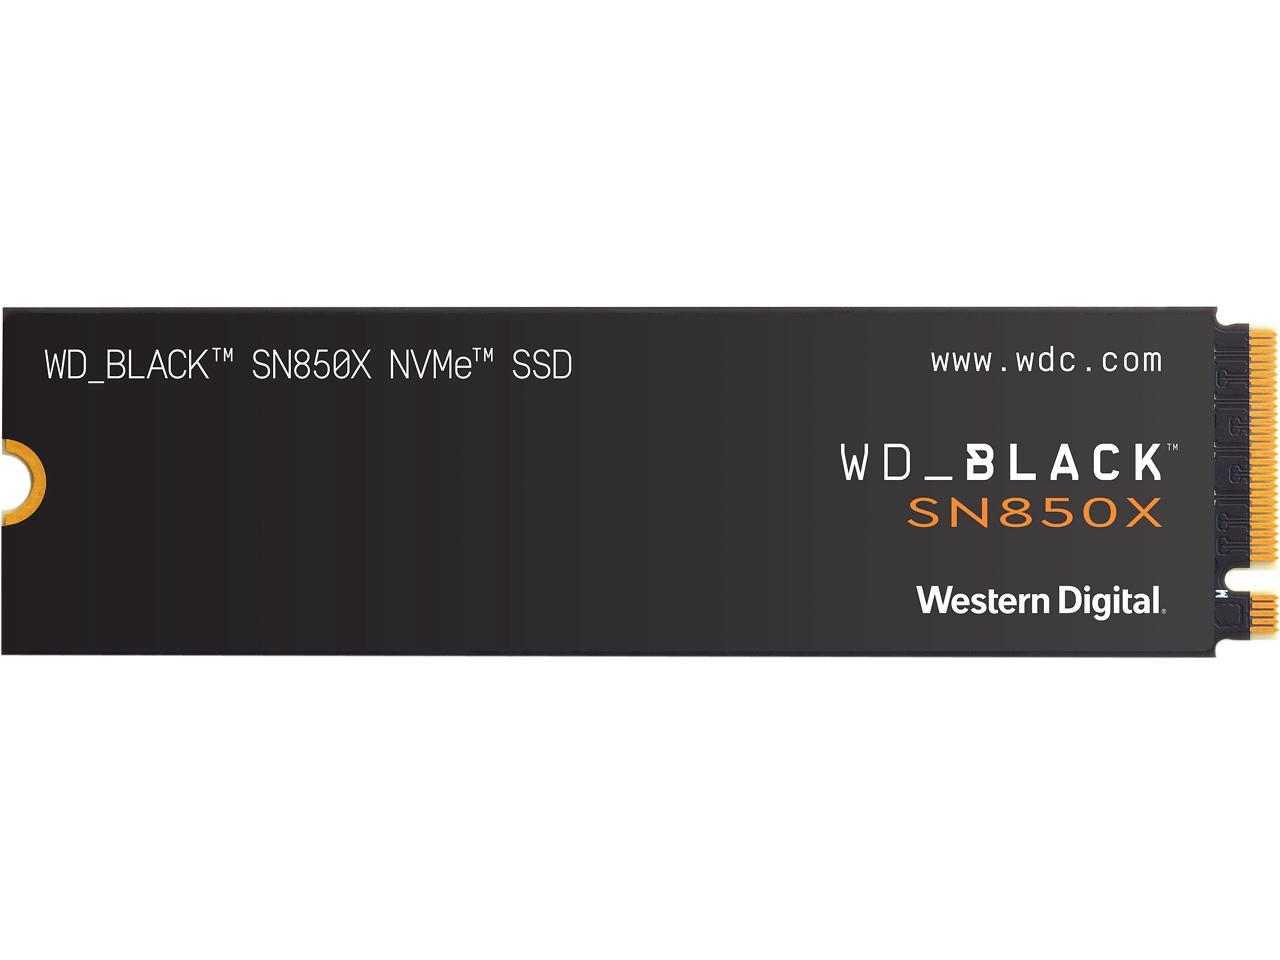 2TB WD_BLACK SN850X NVMe M.2 2280 PCIE4.0x x4 (Without Heatsink) + Free Shipping $152.99